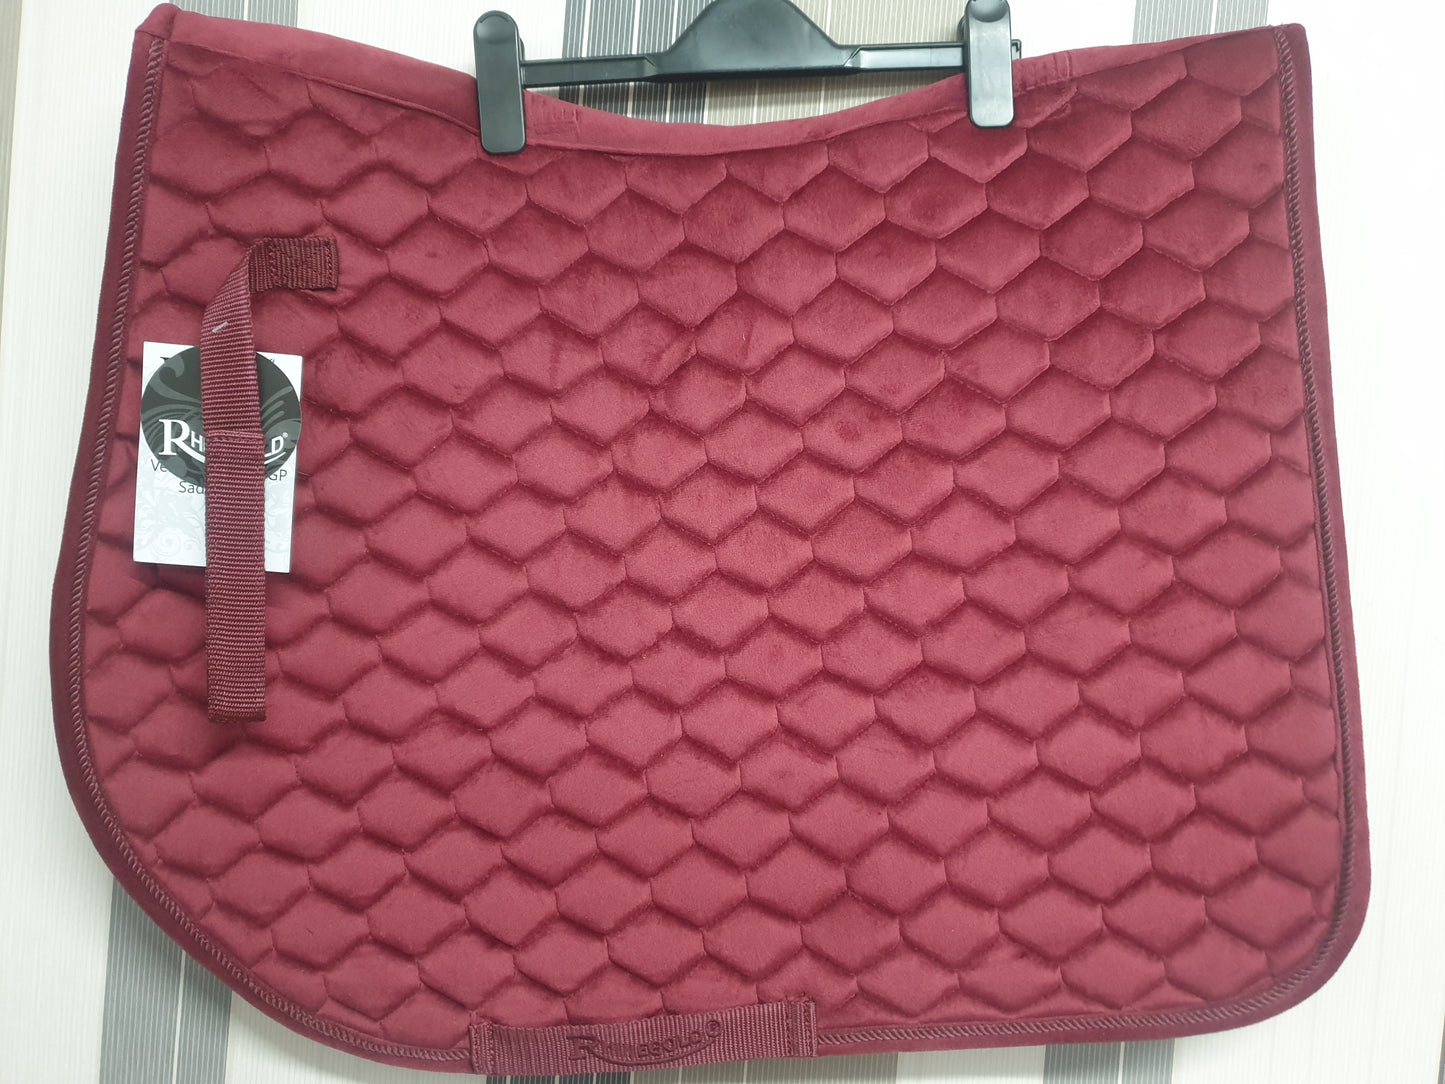 New rhinegold velvet hexagon saddle pad FREE POSTAGE🟢